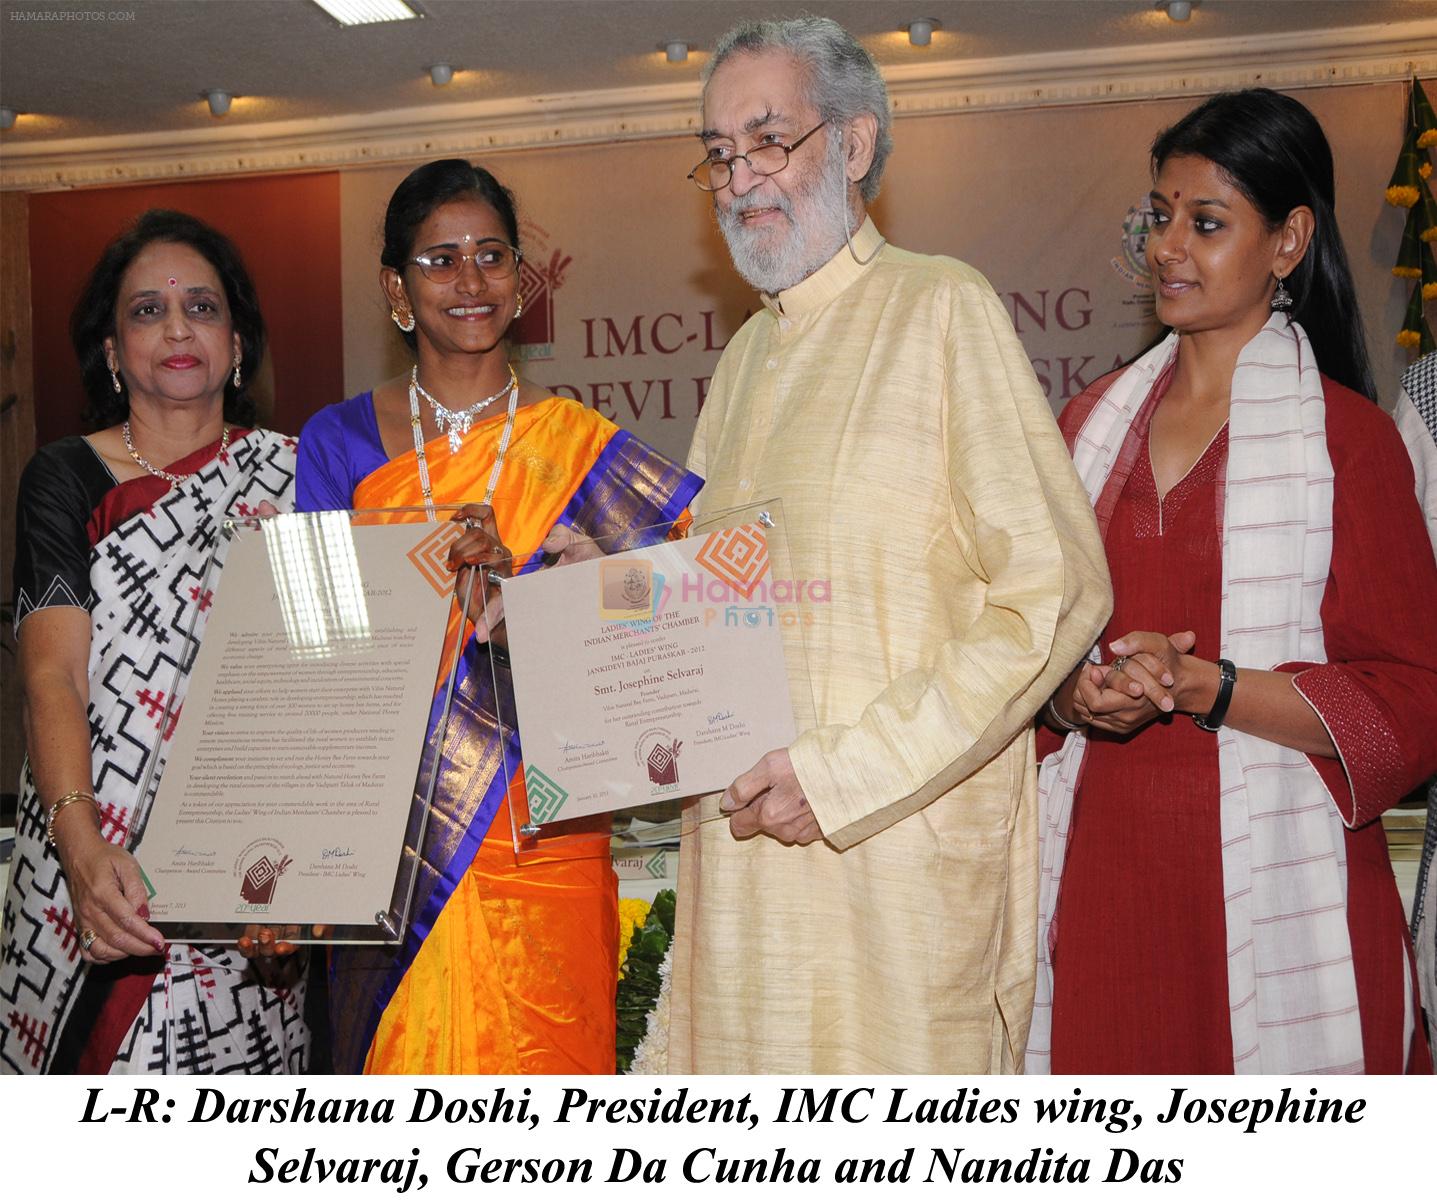 Darshana Doshi, Josephine Selvaraj, Gerson da Cunha and Nandita Das awarded IMC Ladies Wing Jankidevi Bajaj Puraskar 2012 on 8th Jan 2013